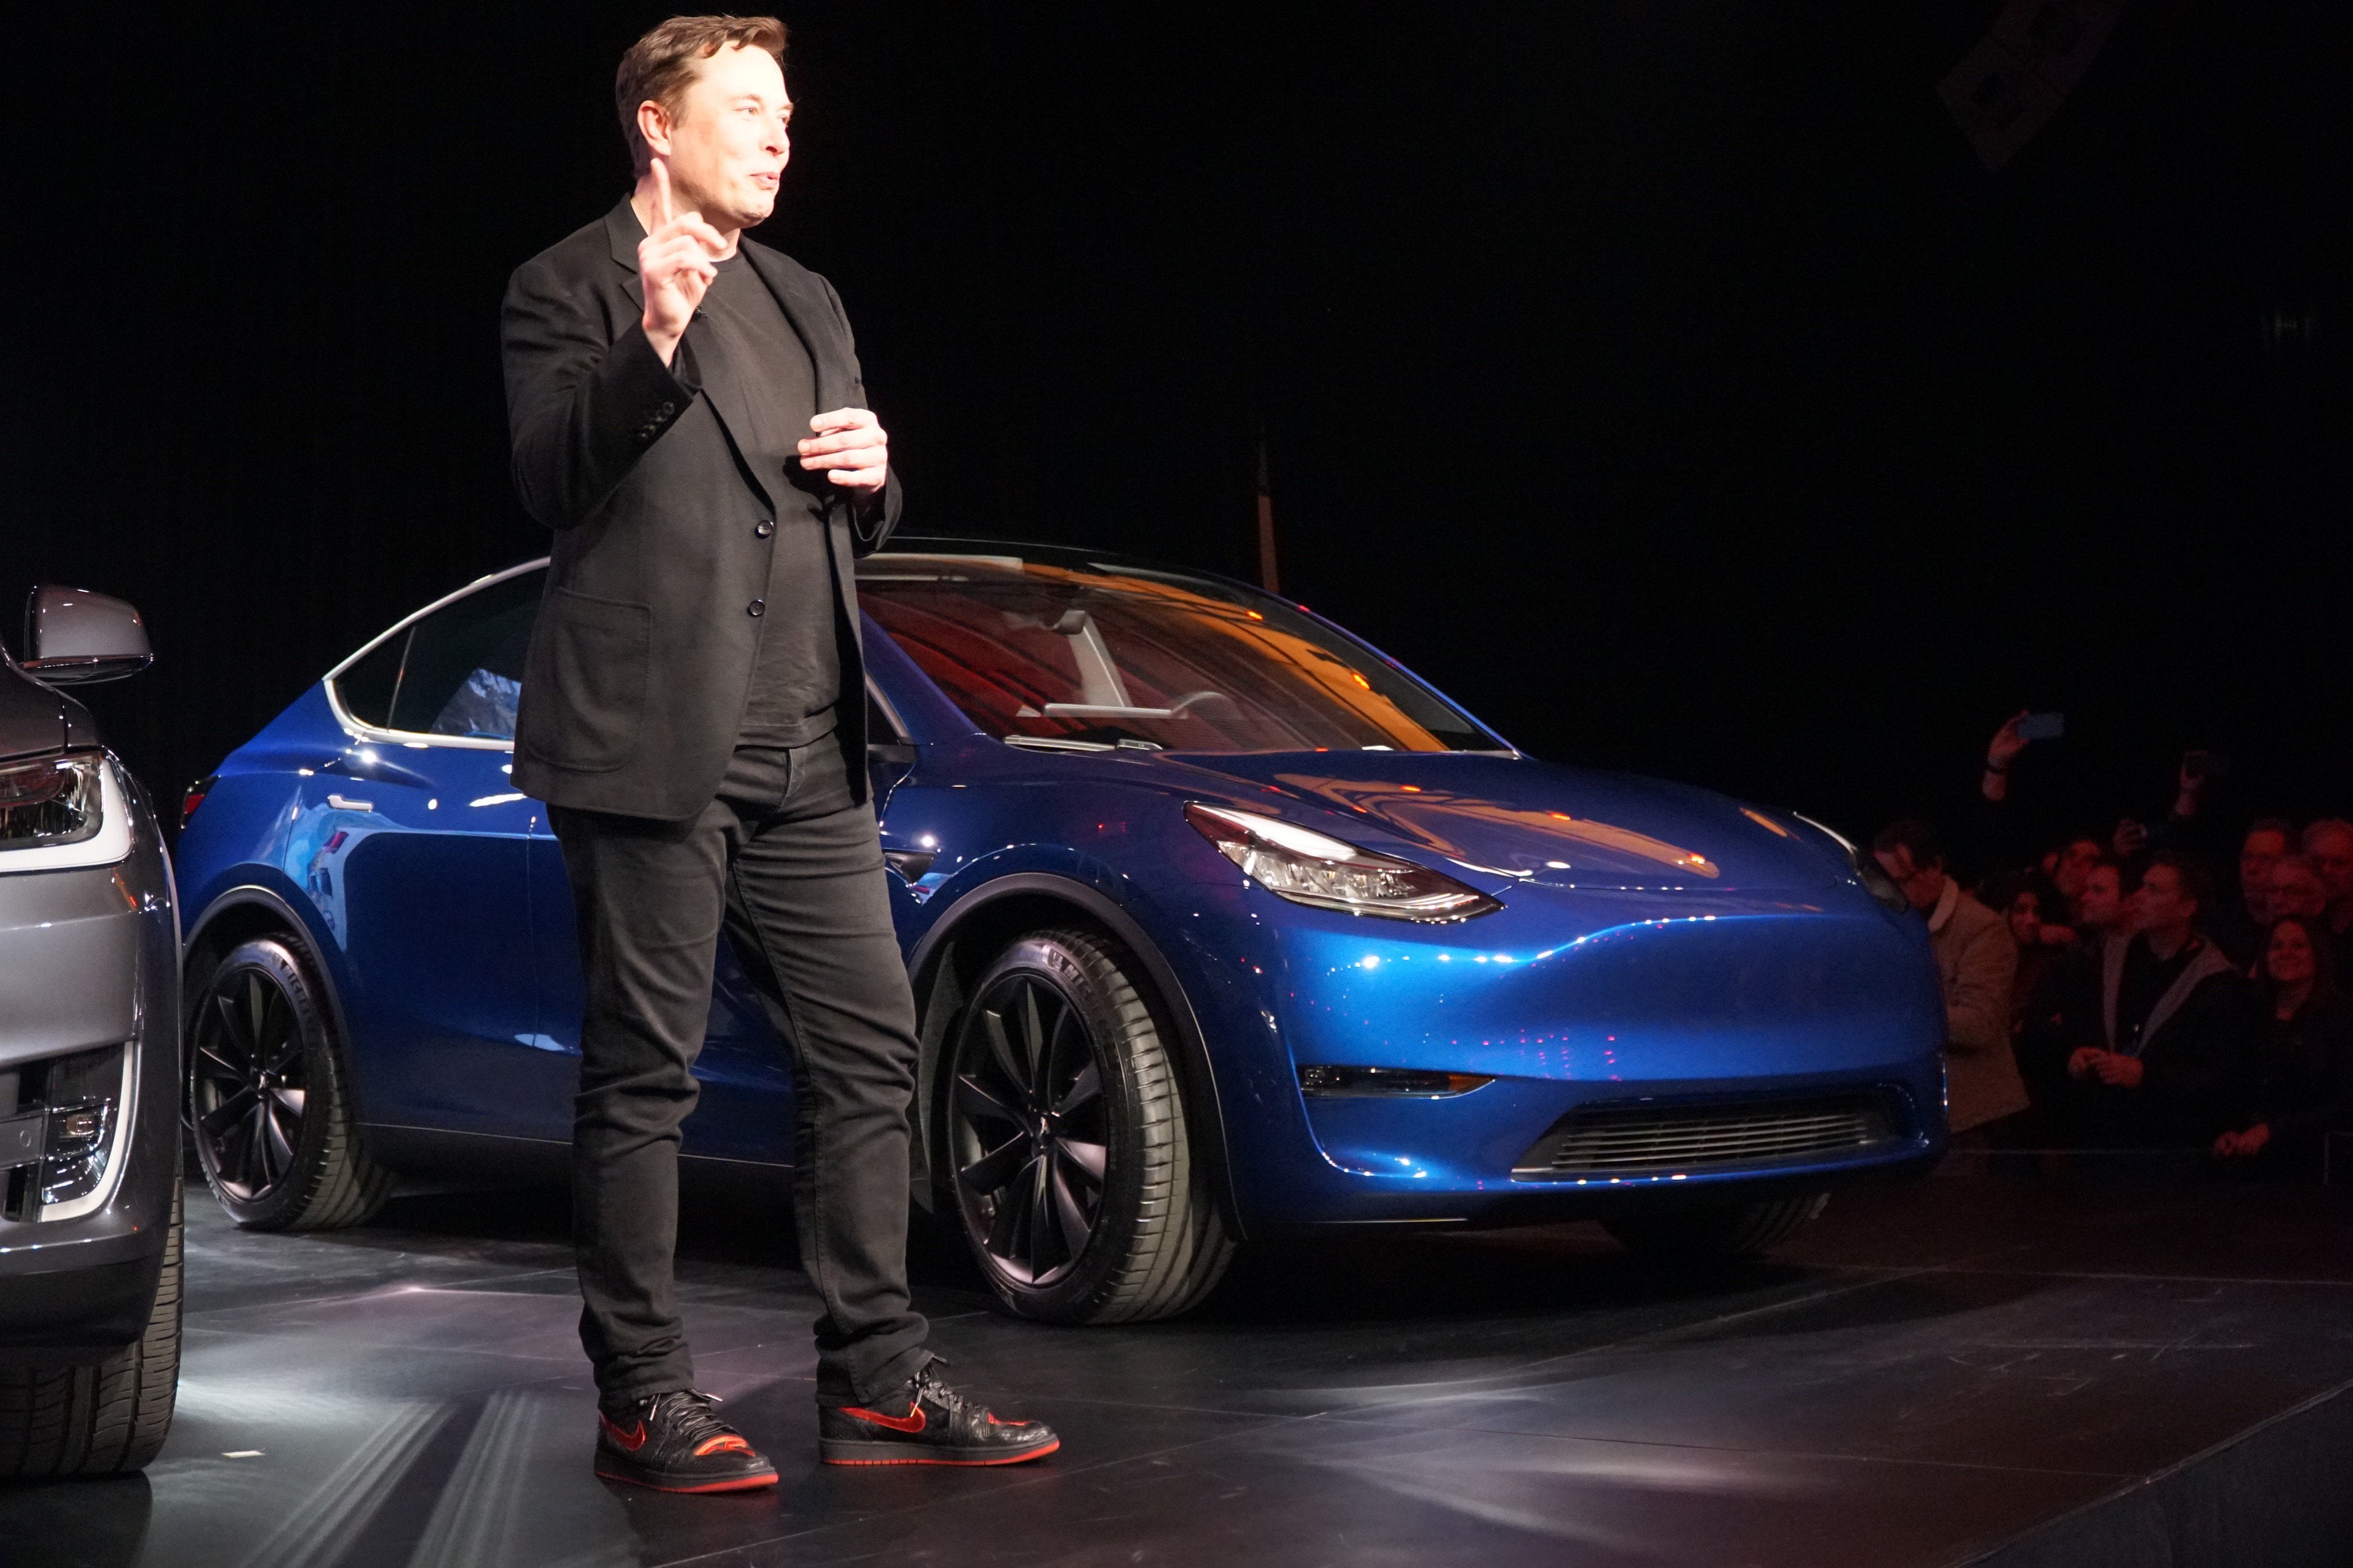 Terminologie Vouwen belegd broodje Get one step closer to being Elon Musk with these custom Tesla Nikes |  EVANNEX Aftermarket Tesla Accessories